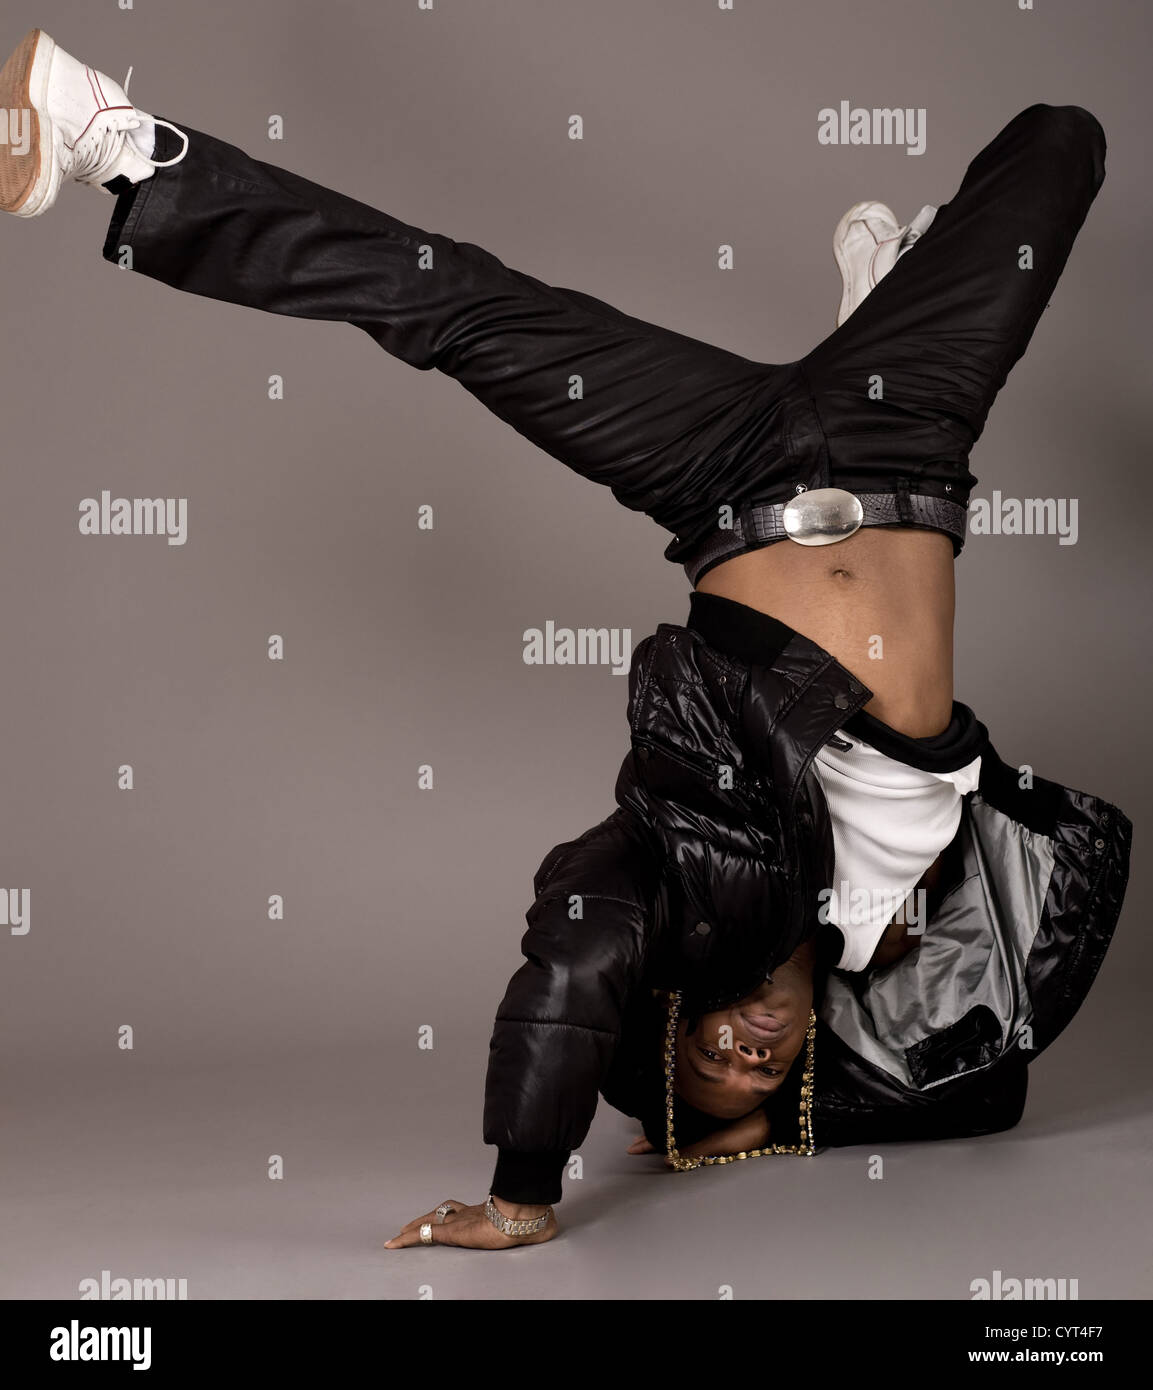 Танцуй руками ногами. Афроамериканец танцует хип хоп. Рэперский костюм. Афро стиль танцы брейк. Мальчик африканец танцует брейк данс картинки.